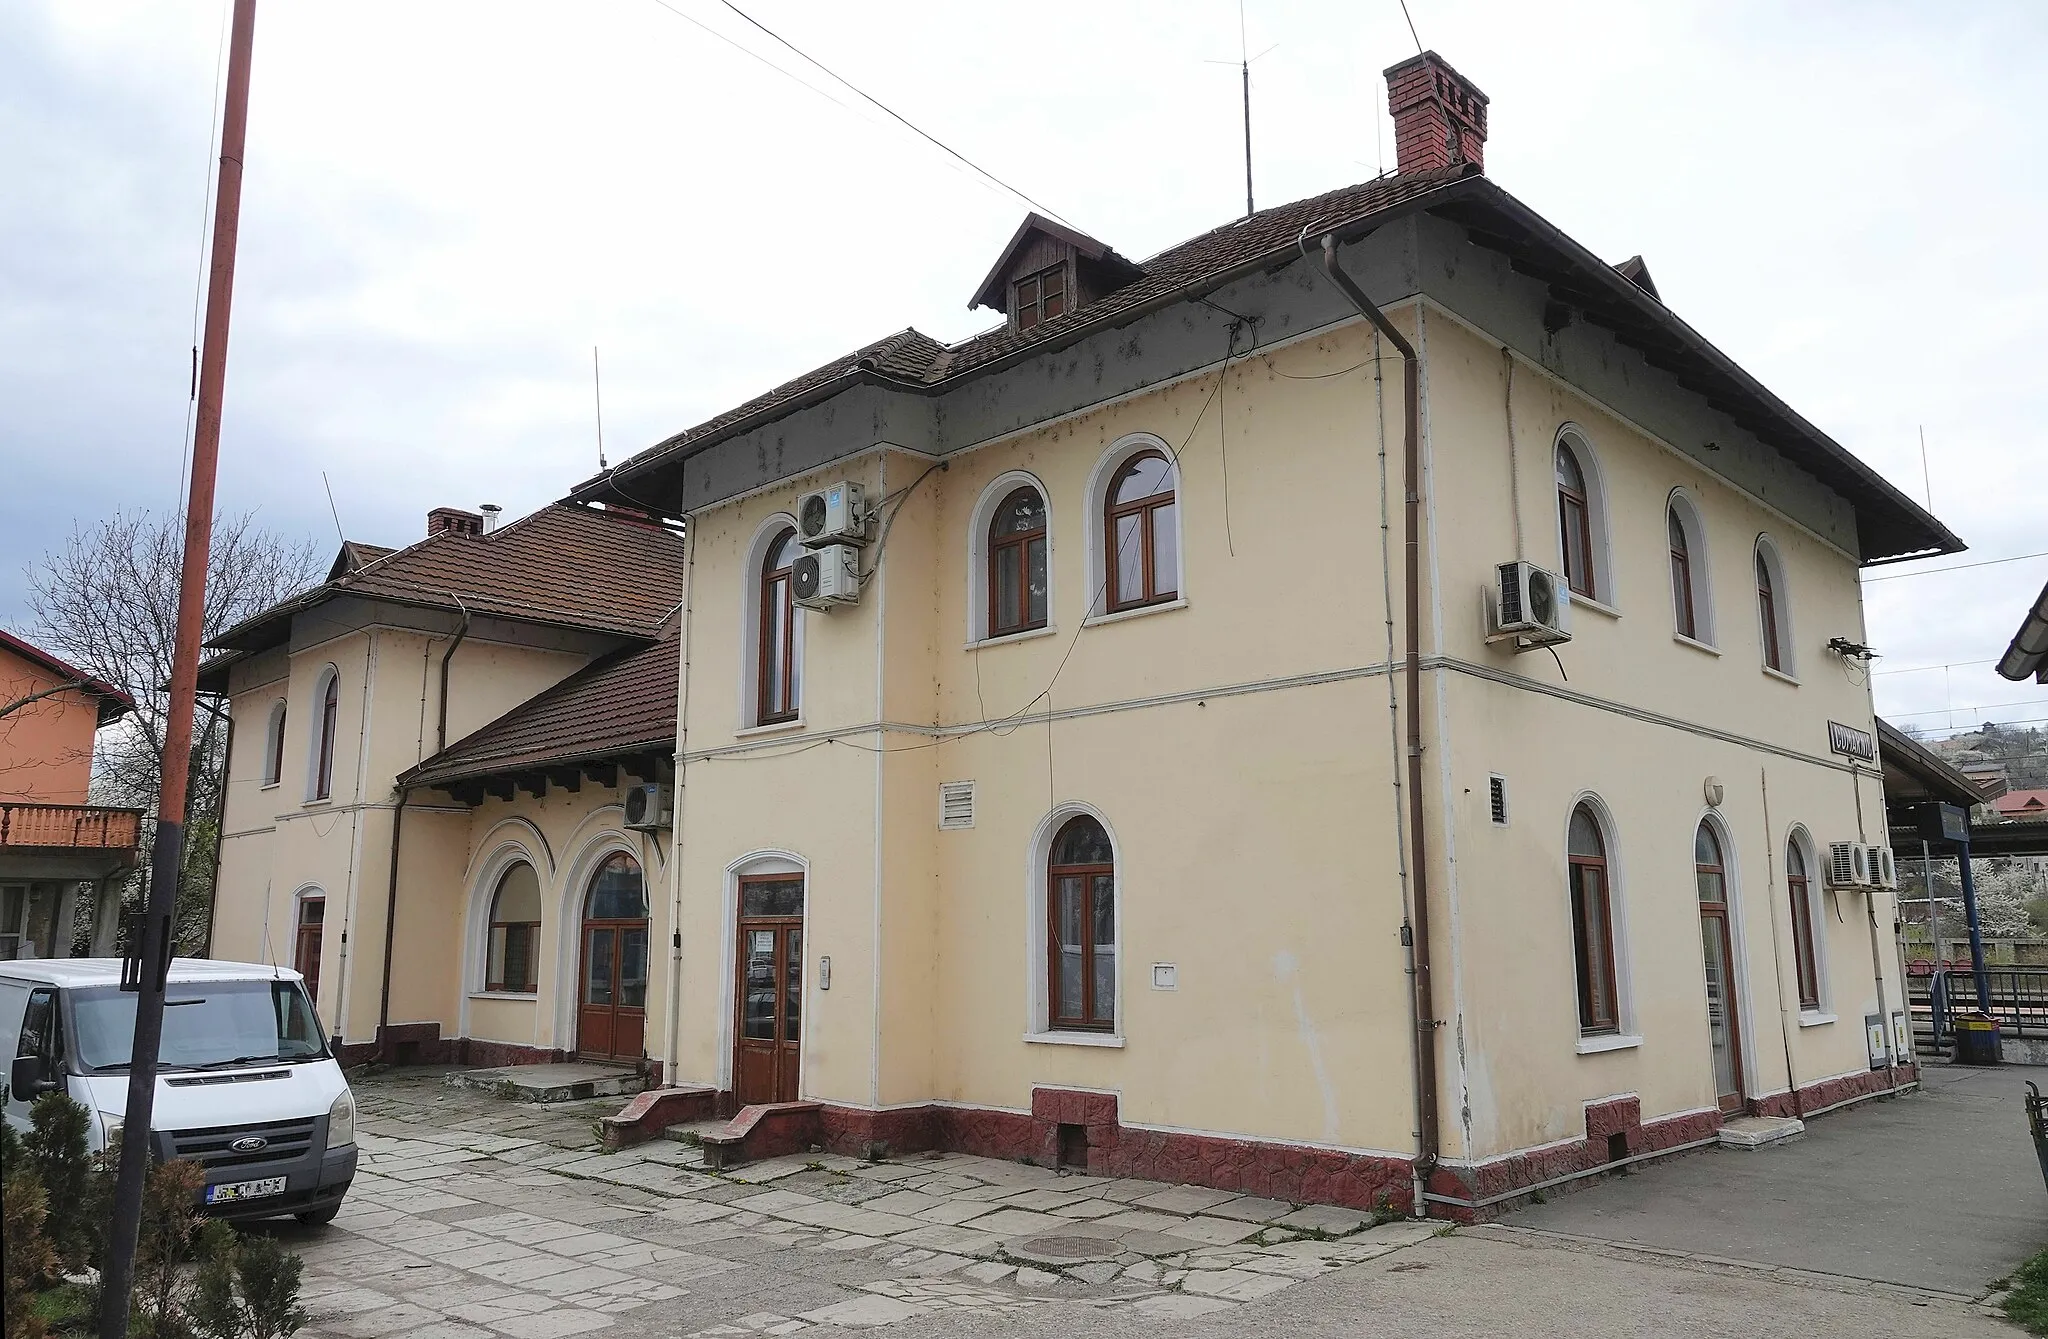 Photo showing: Comarnic railway station in Prahova county, Romania.